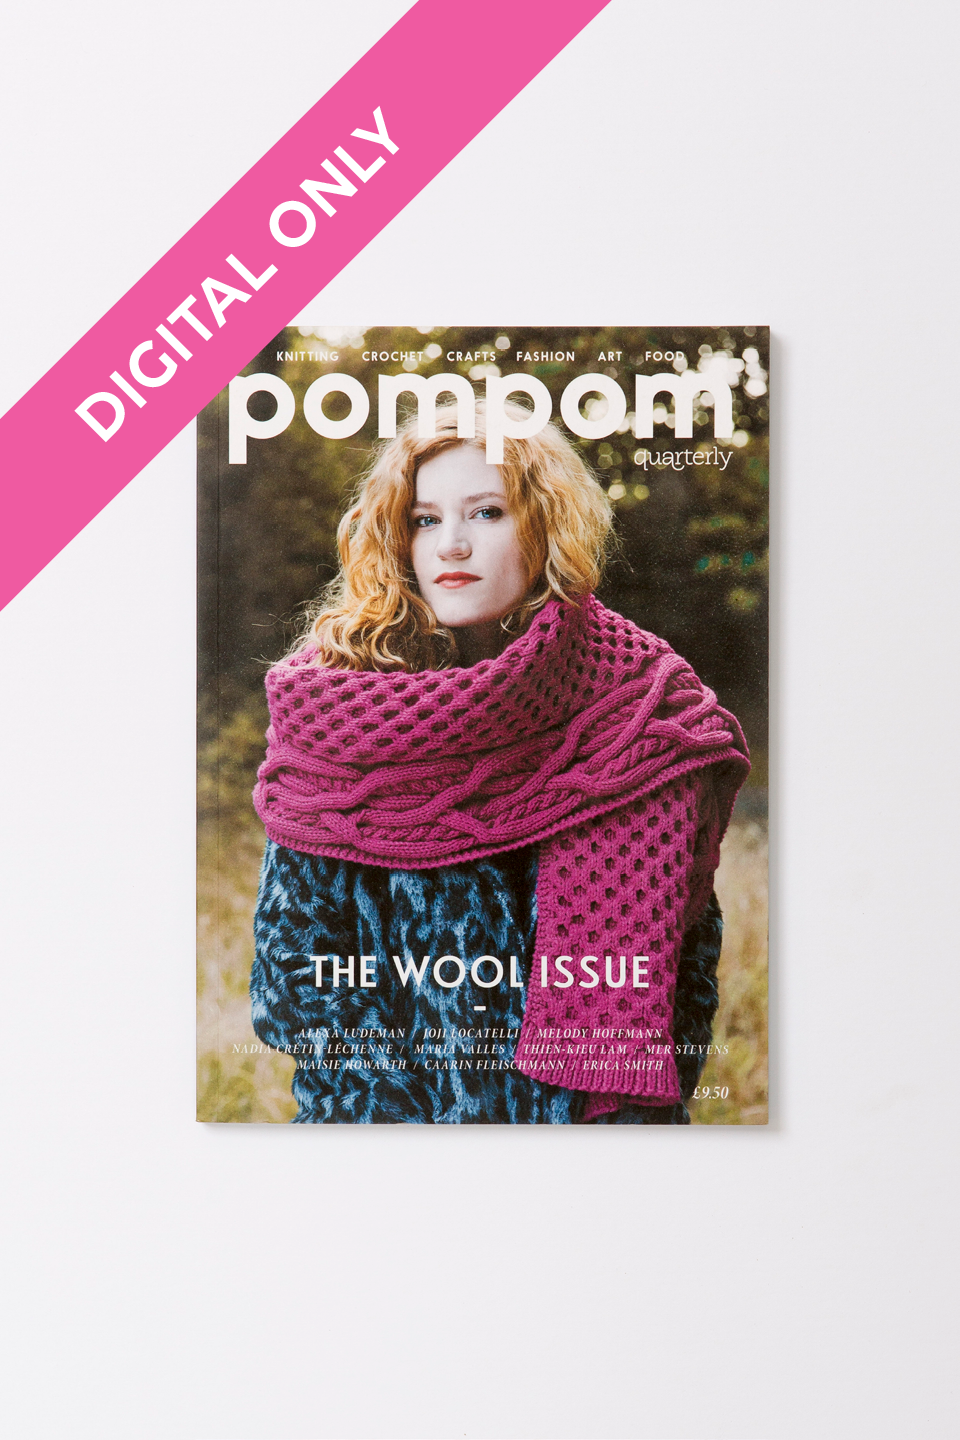 Issue 14: Autumn 2015